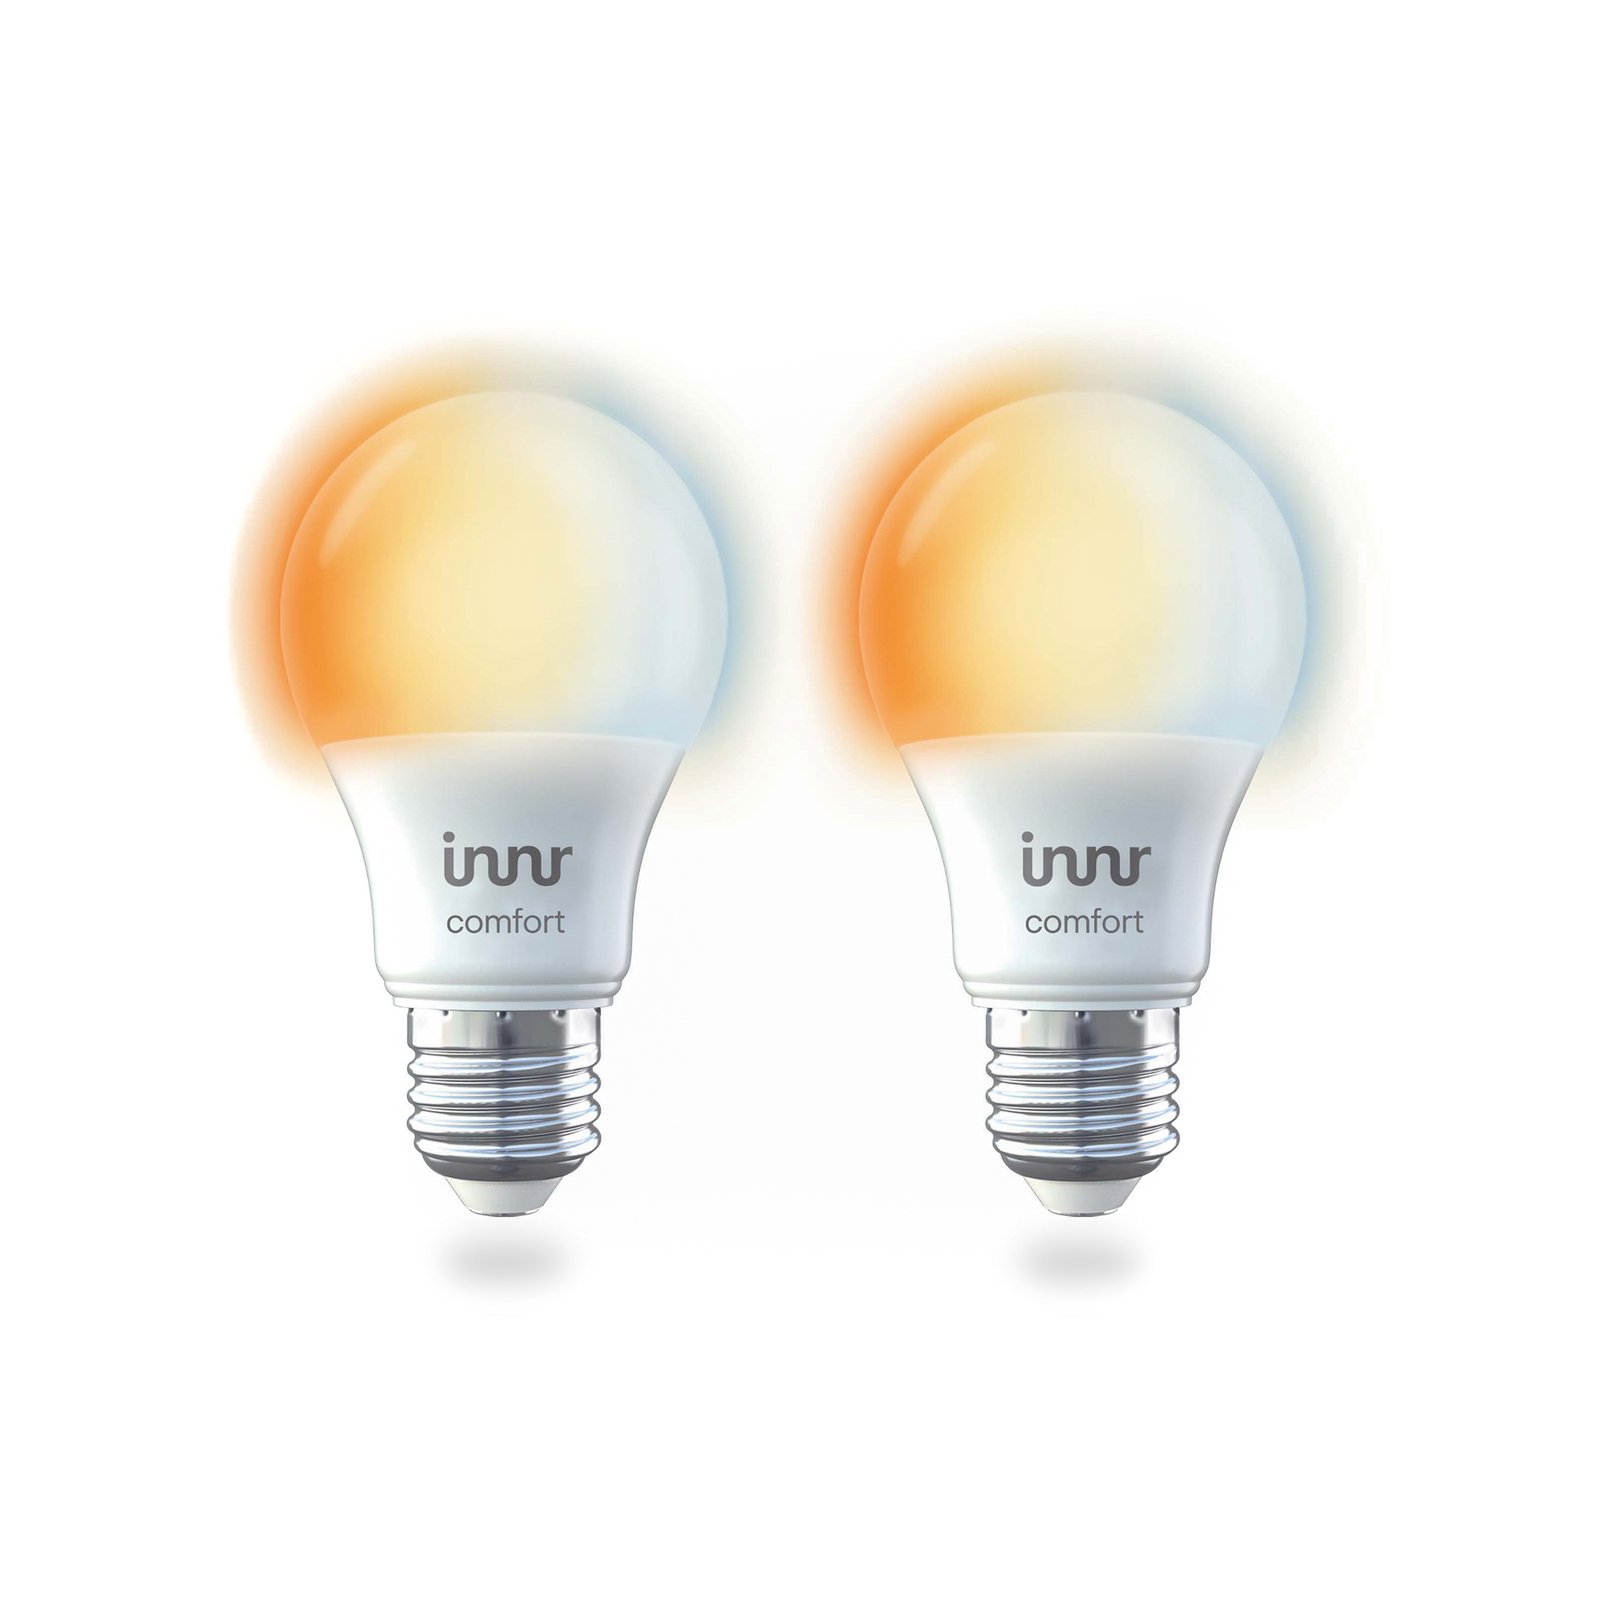 Innr ampoule LED Smart Bulb Comfort E27 8,5W, x2